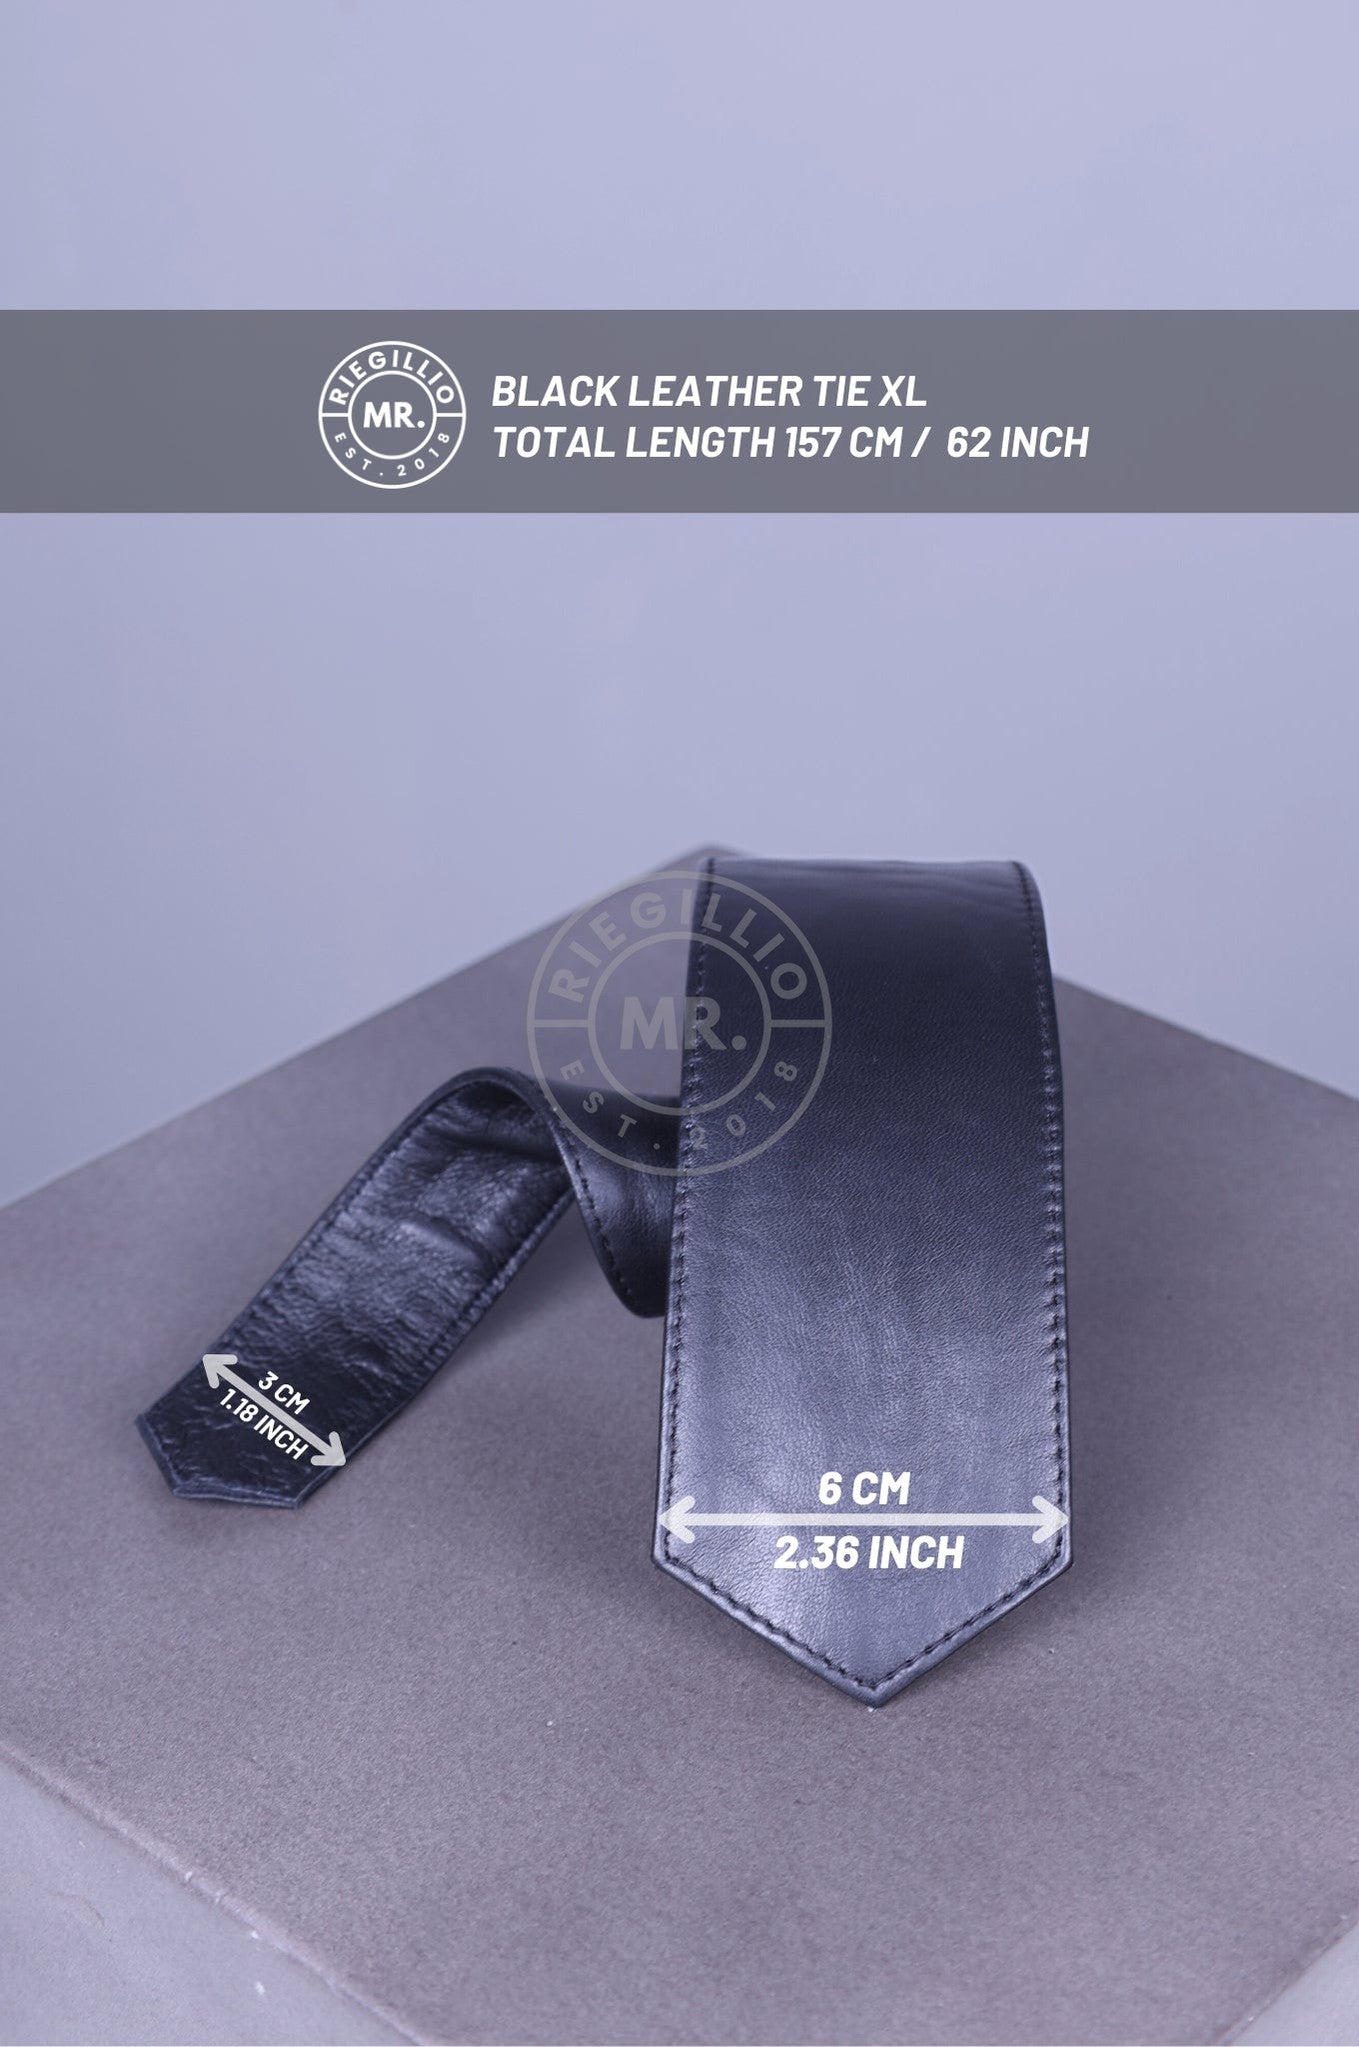 Black Leather Tie XL-at MR. Riegillio